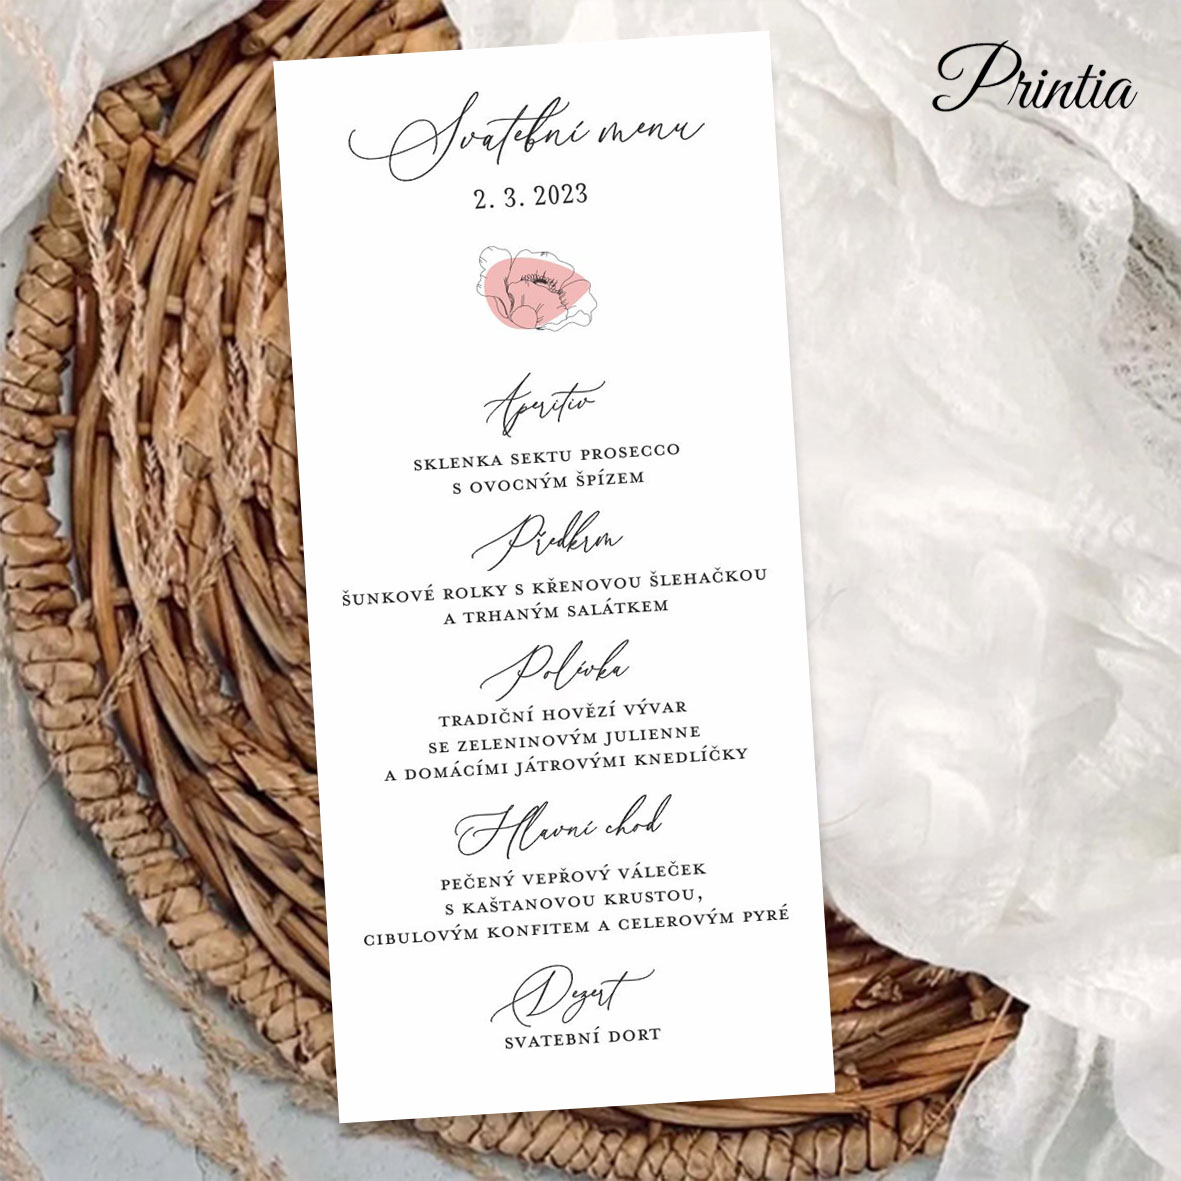 Elegant wedding menu with poppy flower